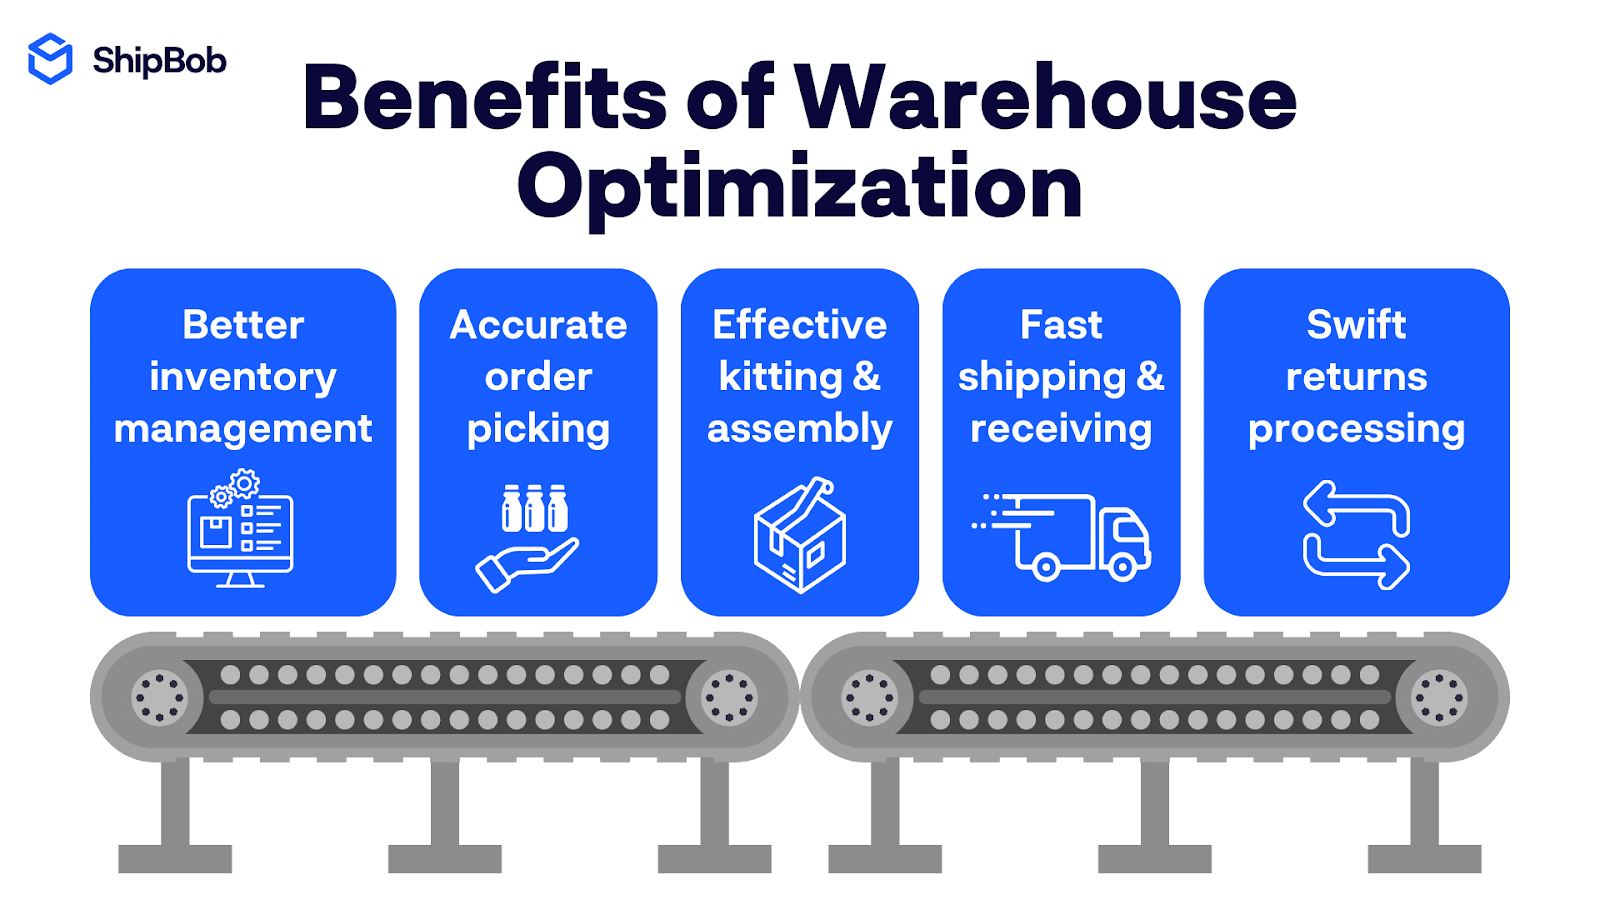 Benefits of warehouse optimization